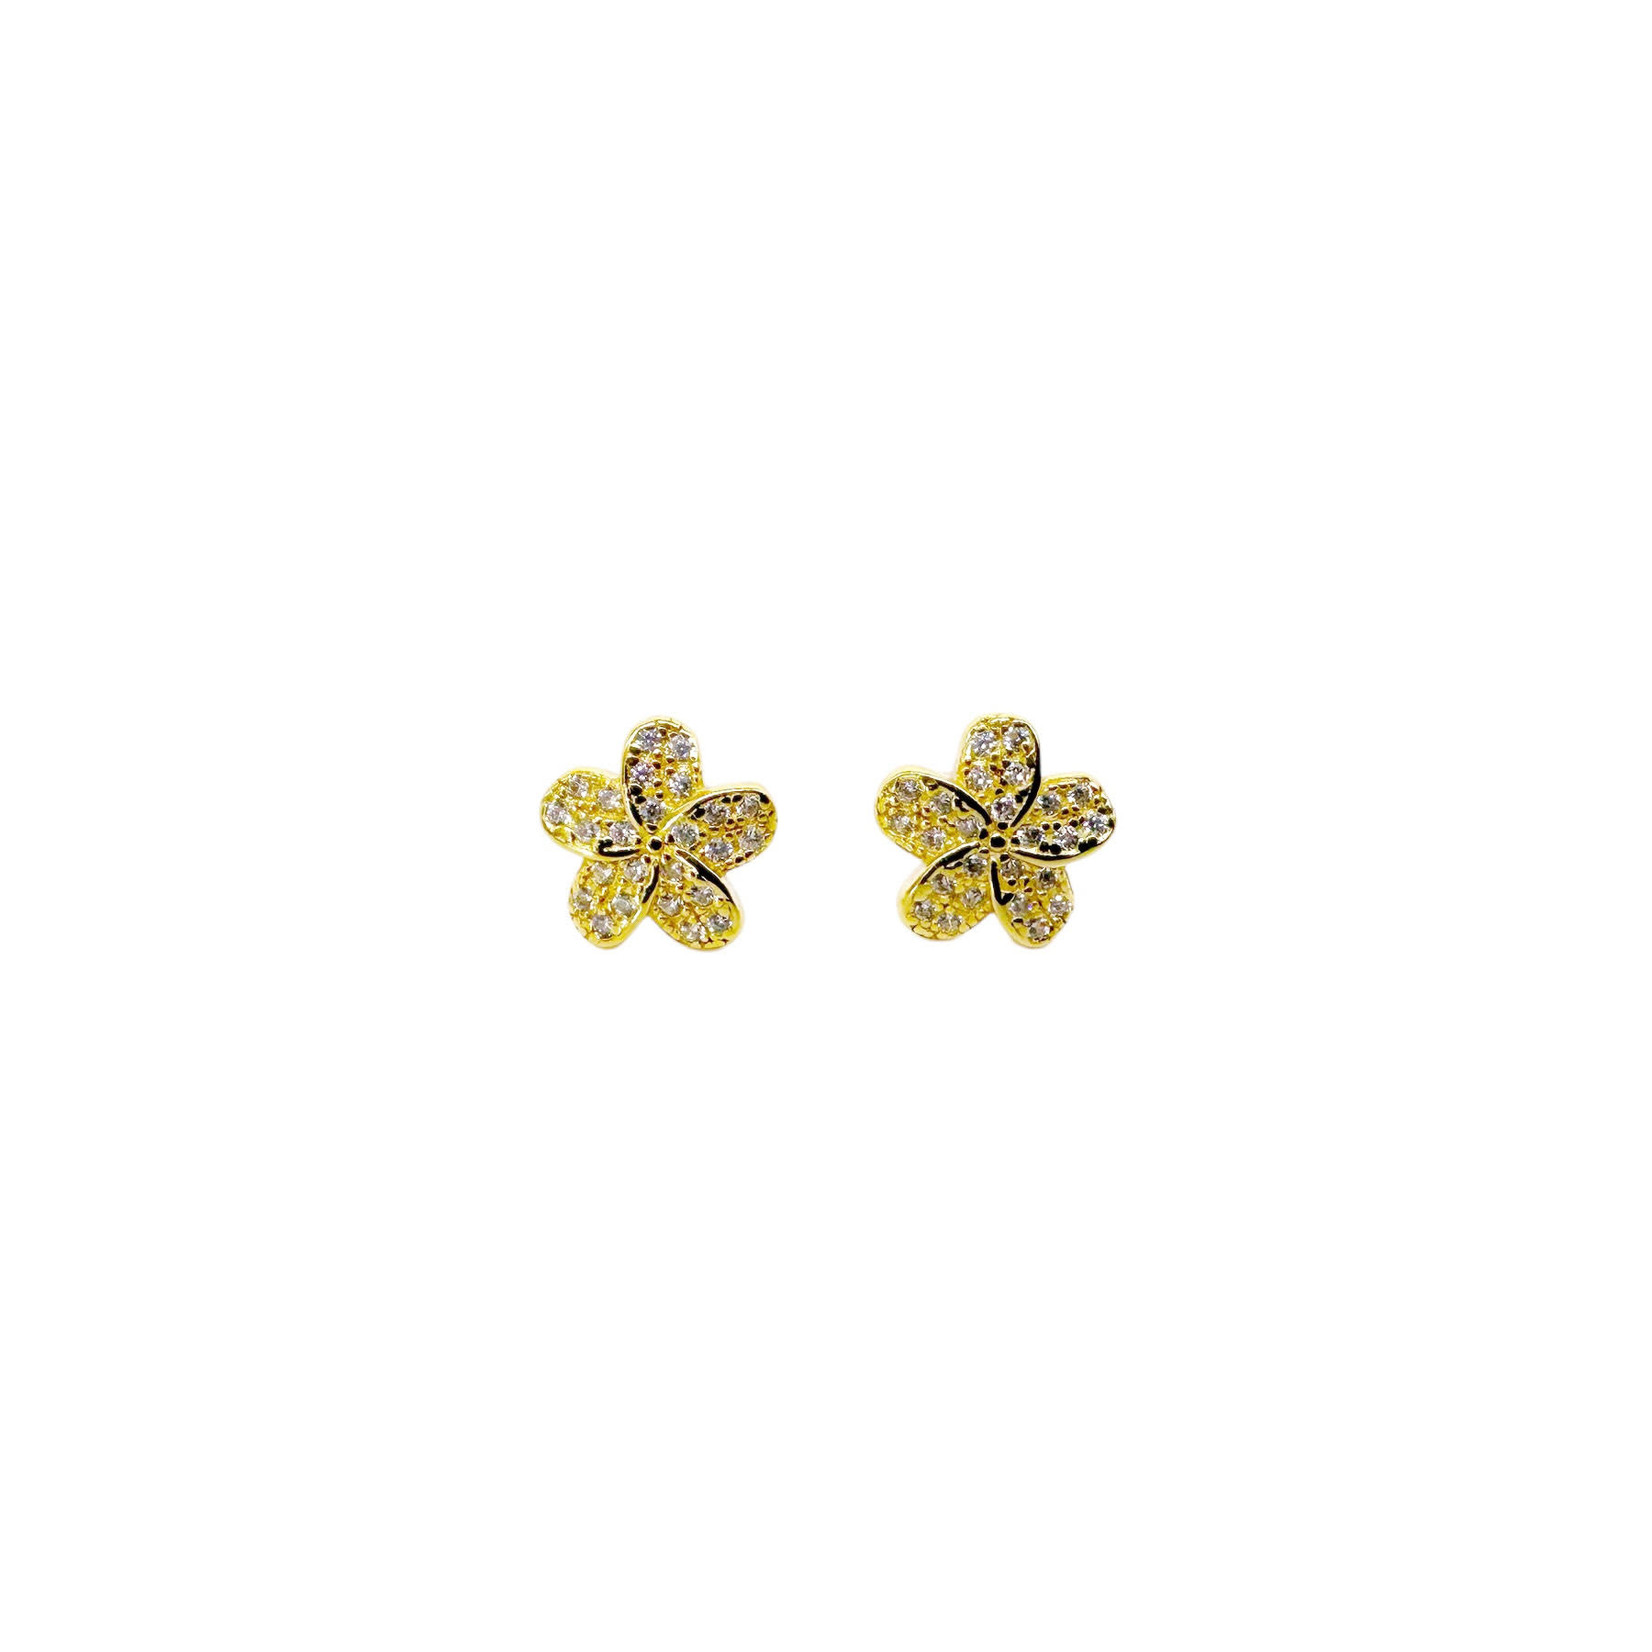 SE499 Sterling Silver Gold Plated CZ Earrings Flower